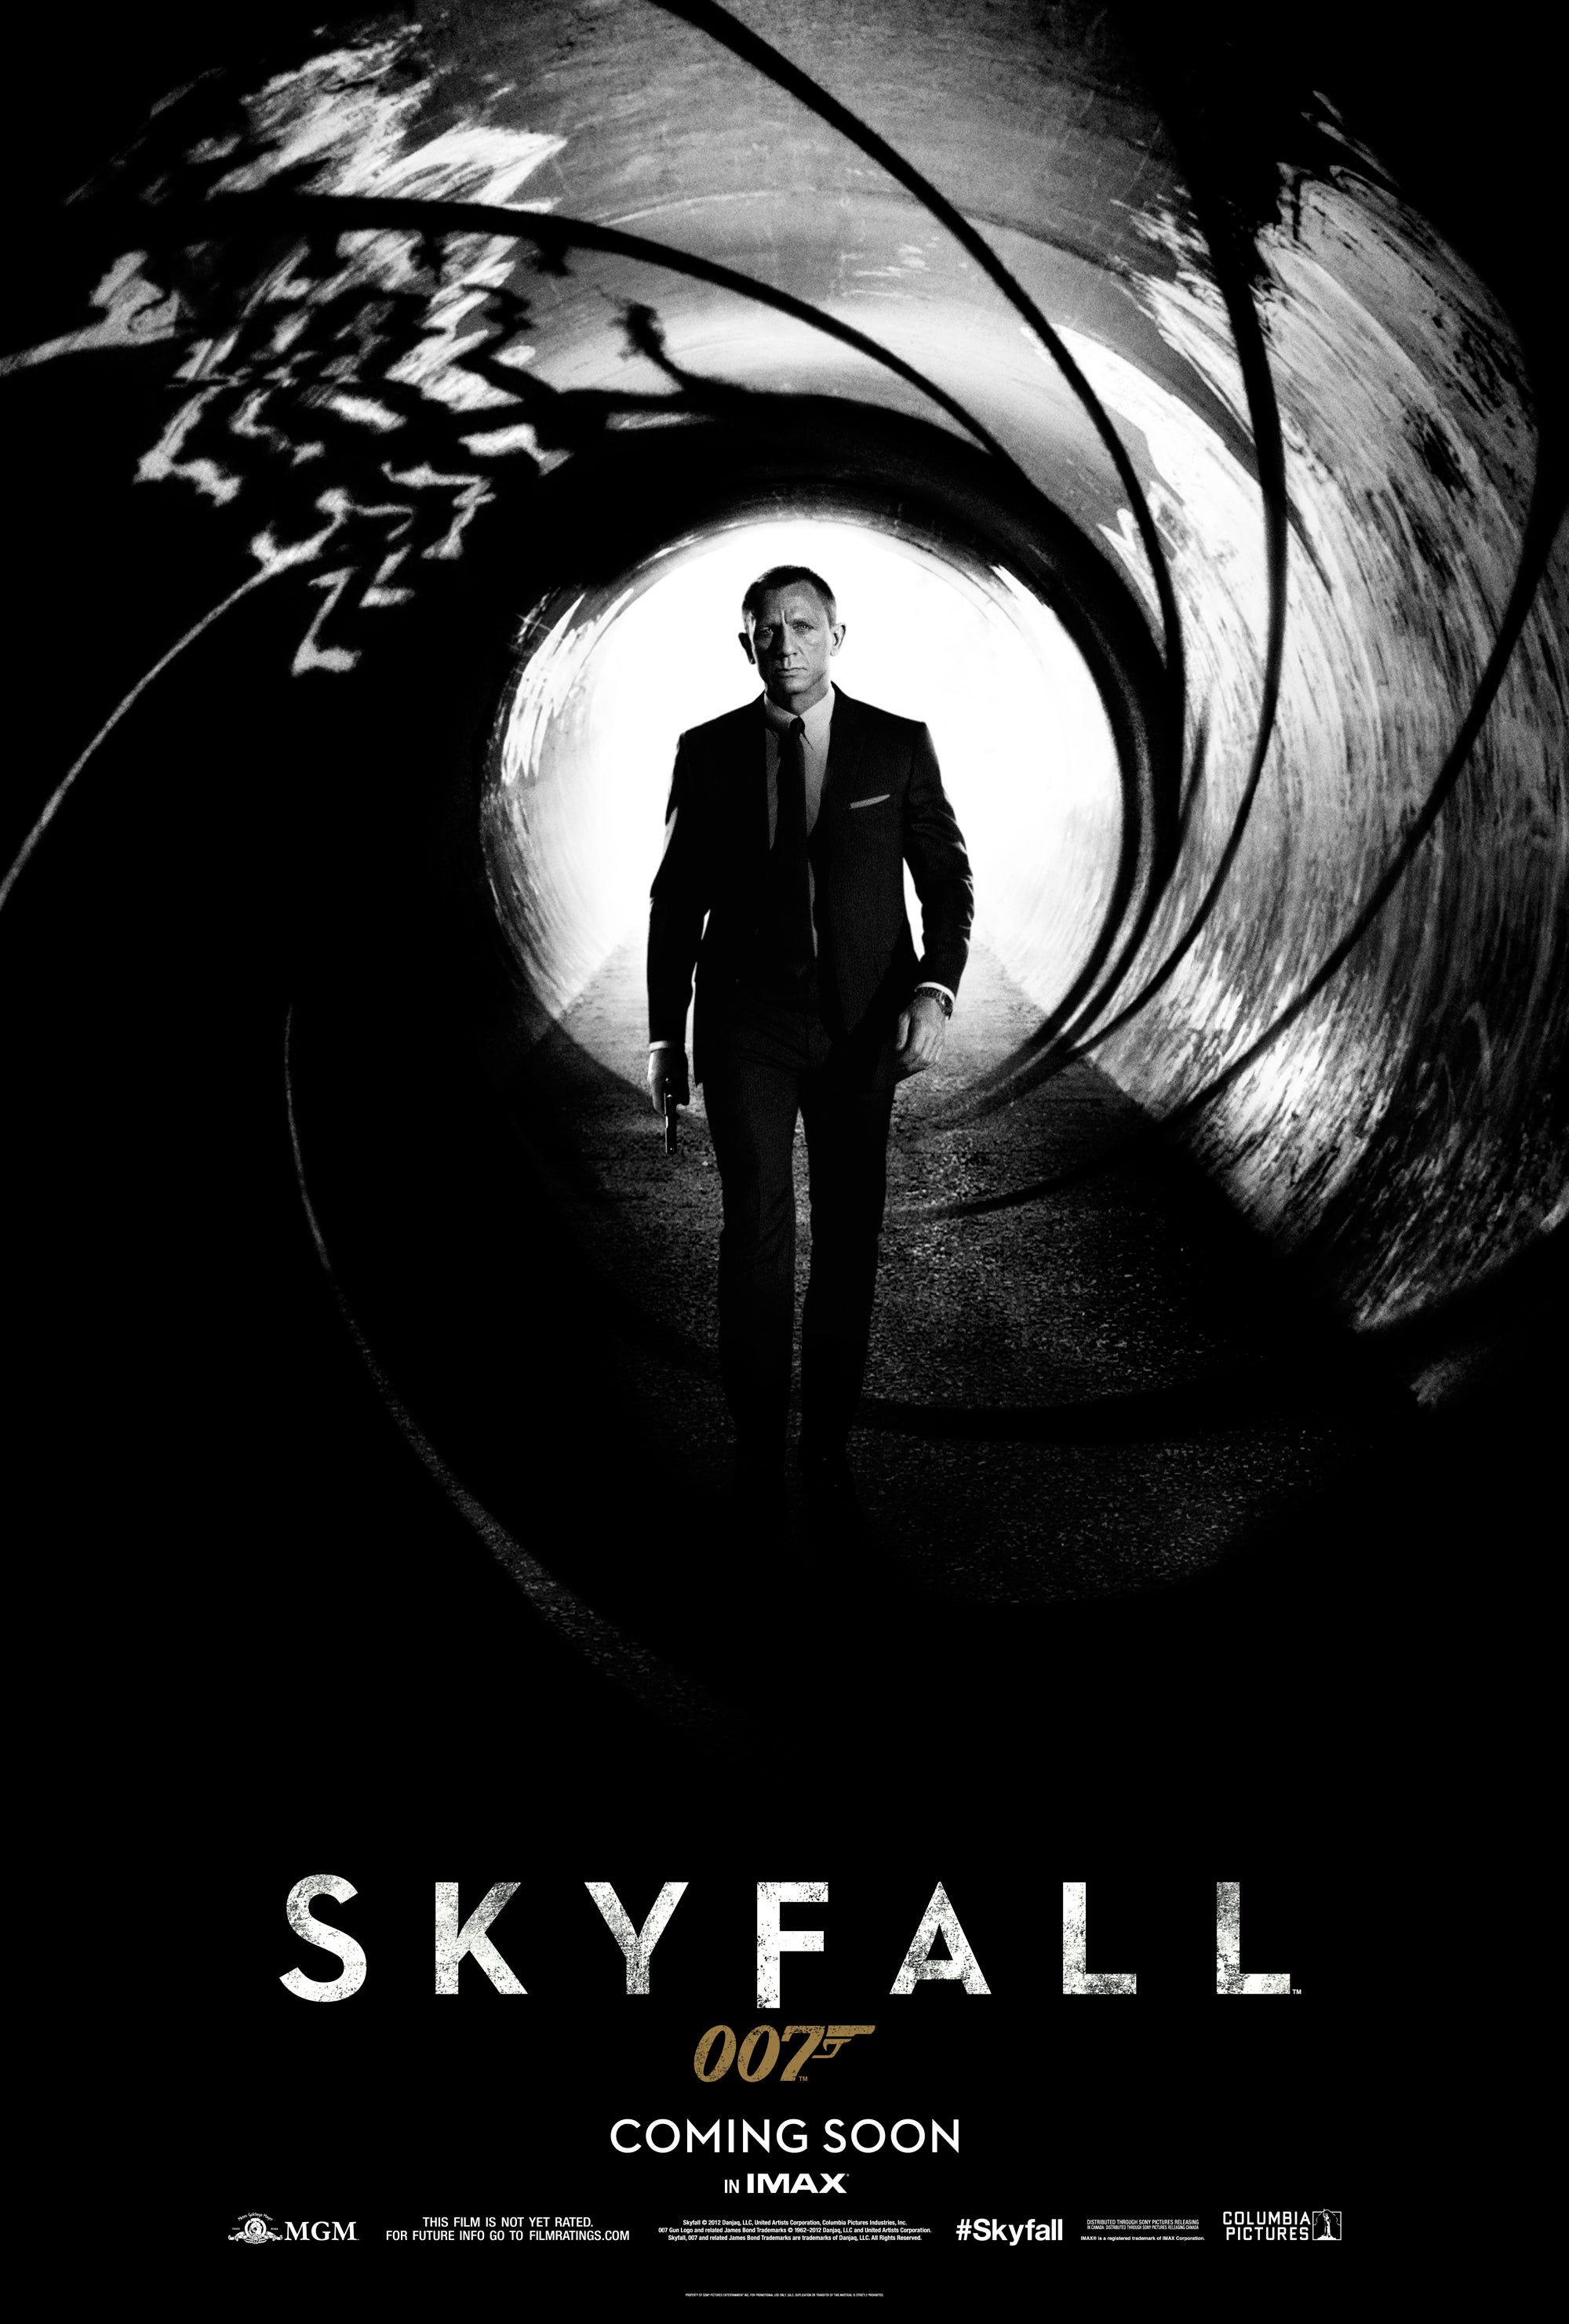 The Official James Bond 007 Website Skyfall Poster Revealed